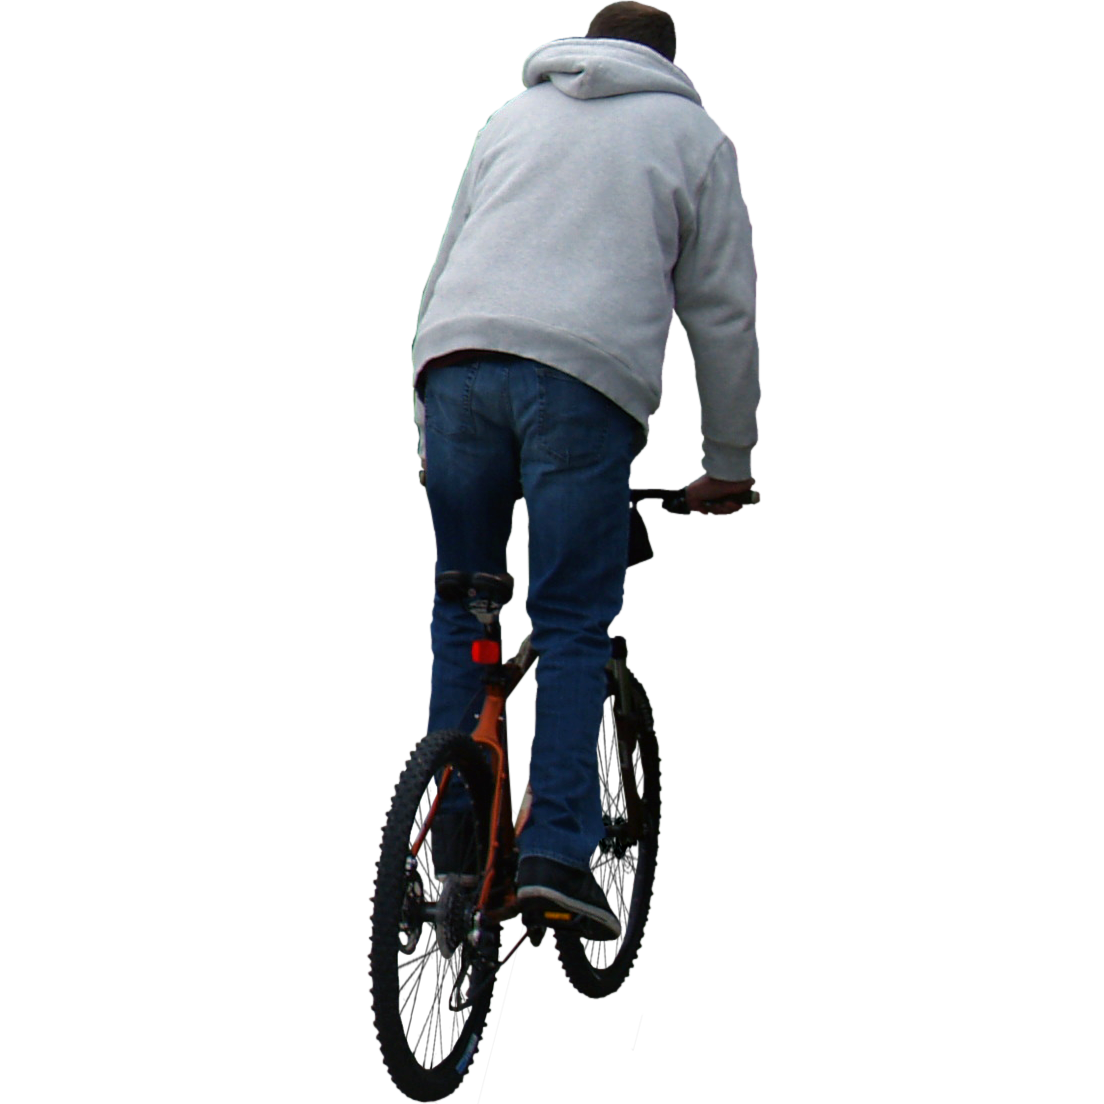 Bike silhouette for kids, Bik